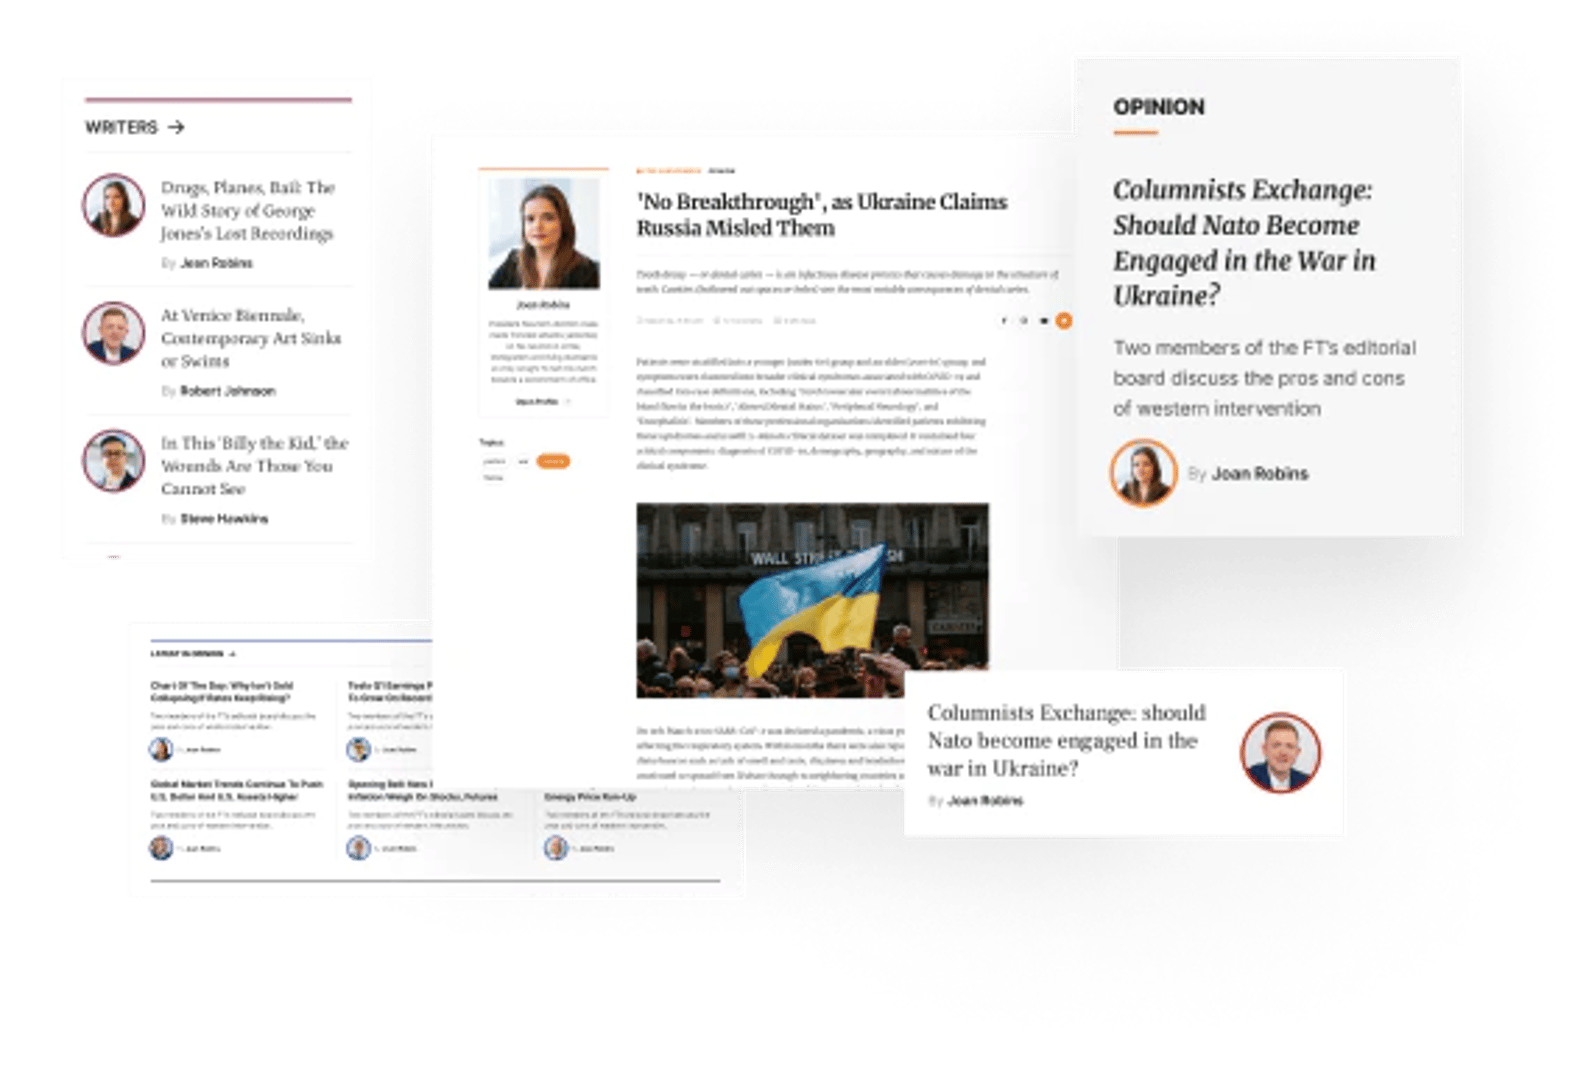 The Reporter - Newspaper Editorial WordPress Theme - Opinion Posts Layouts | Cmsmasters studio